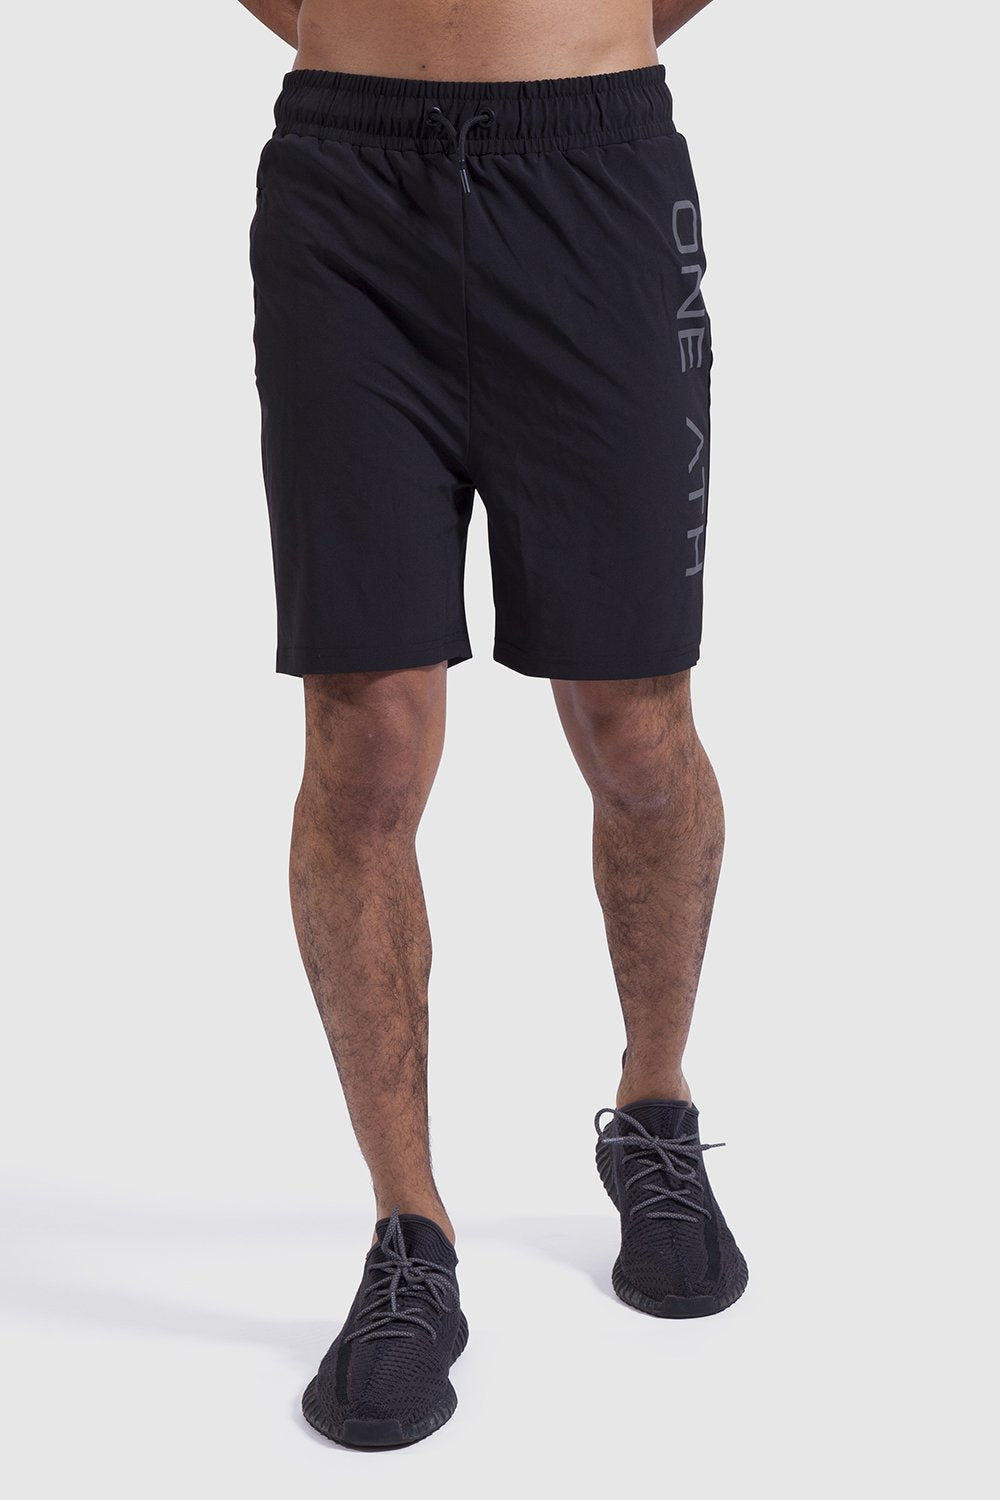 One Athletic training shorts in black